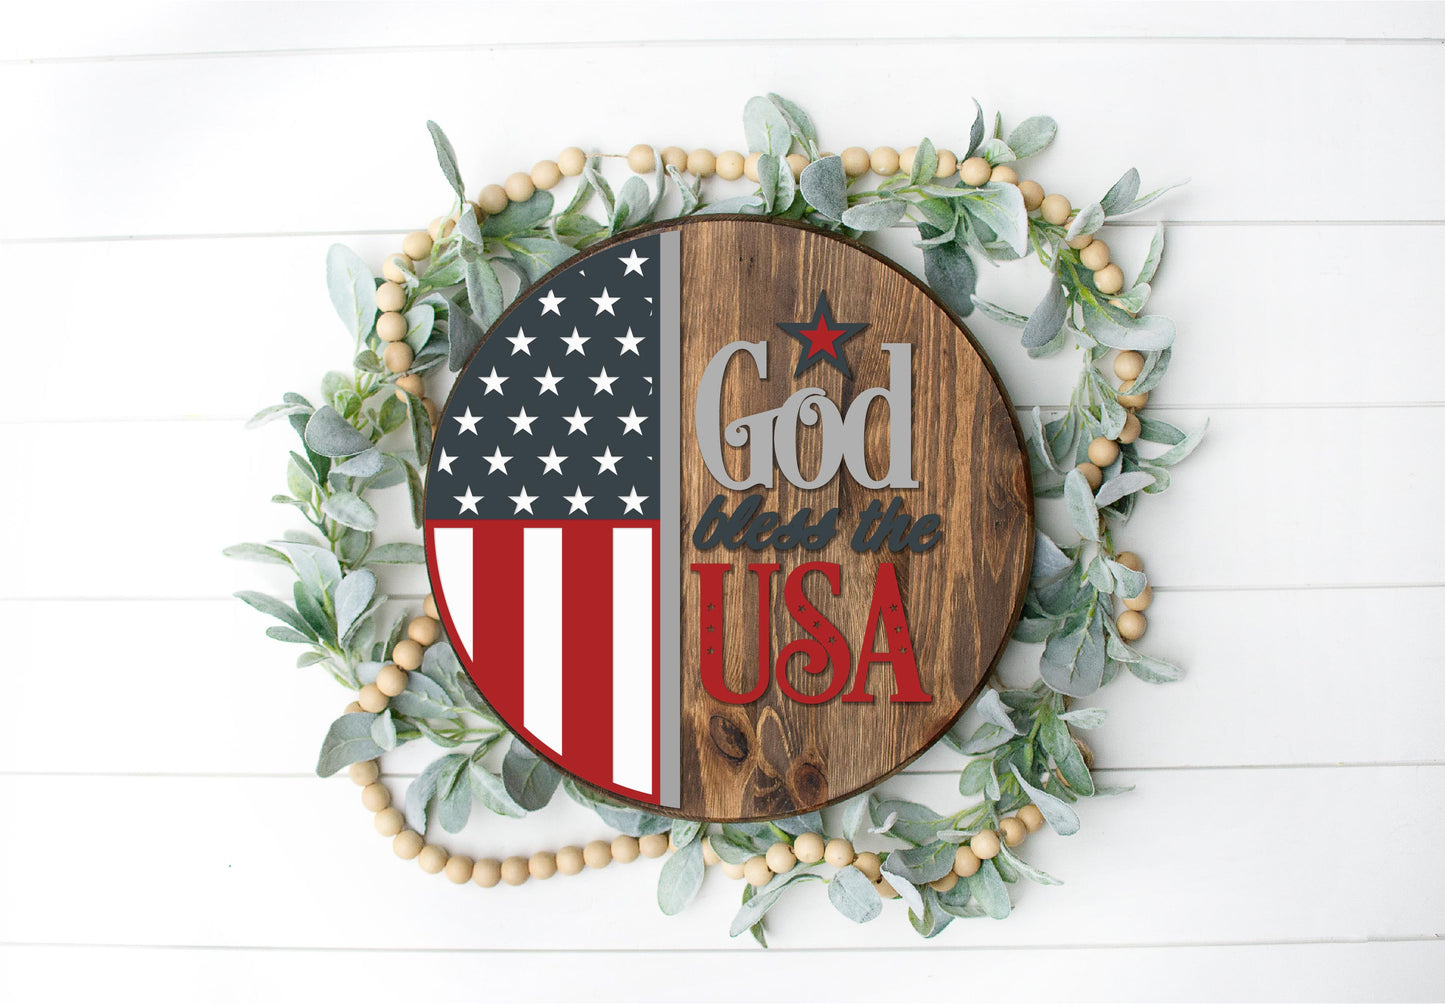 God bless the USA DIY sign